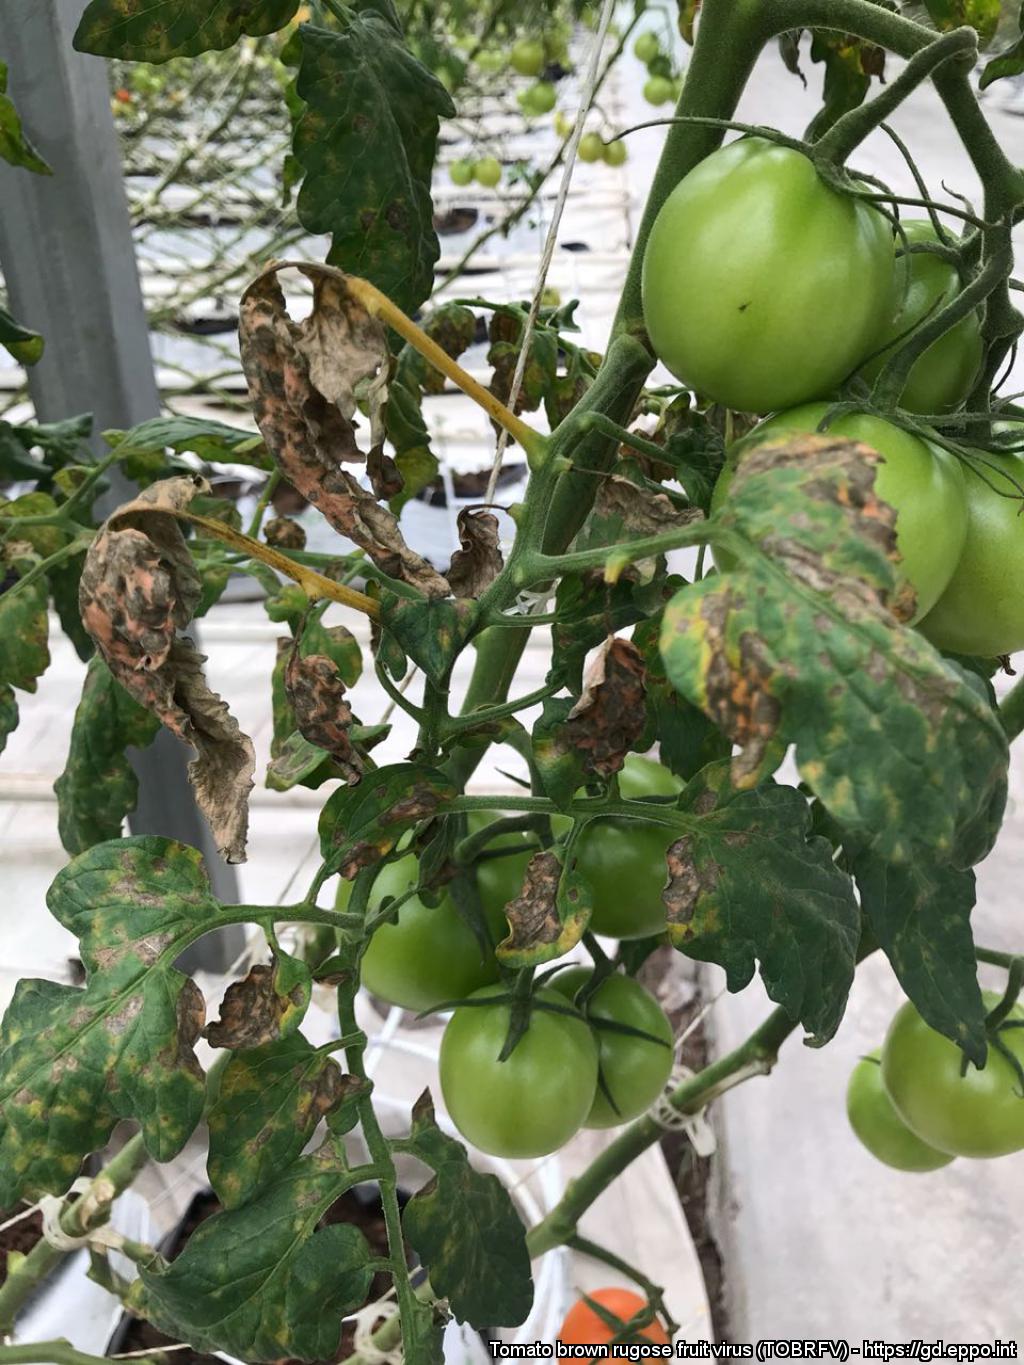 Tomato rugose foliage connell university